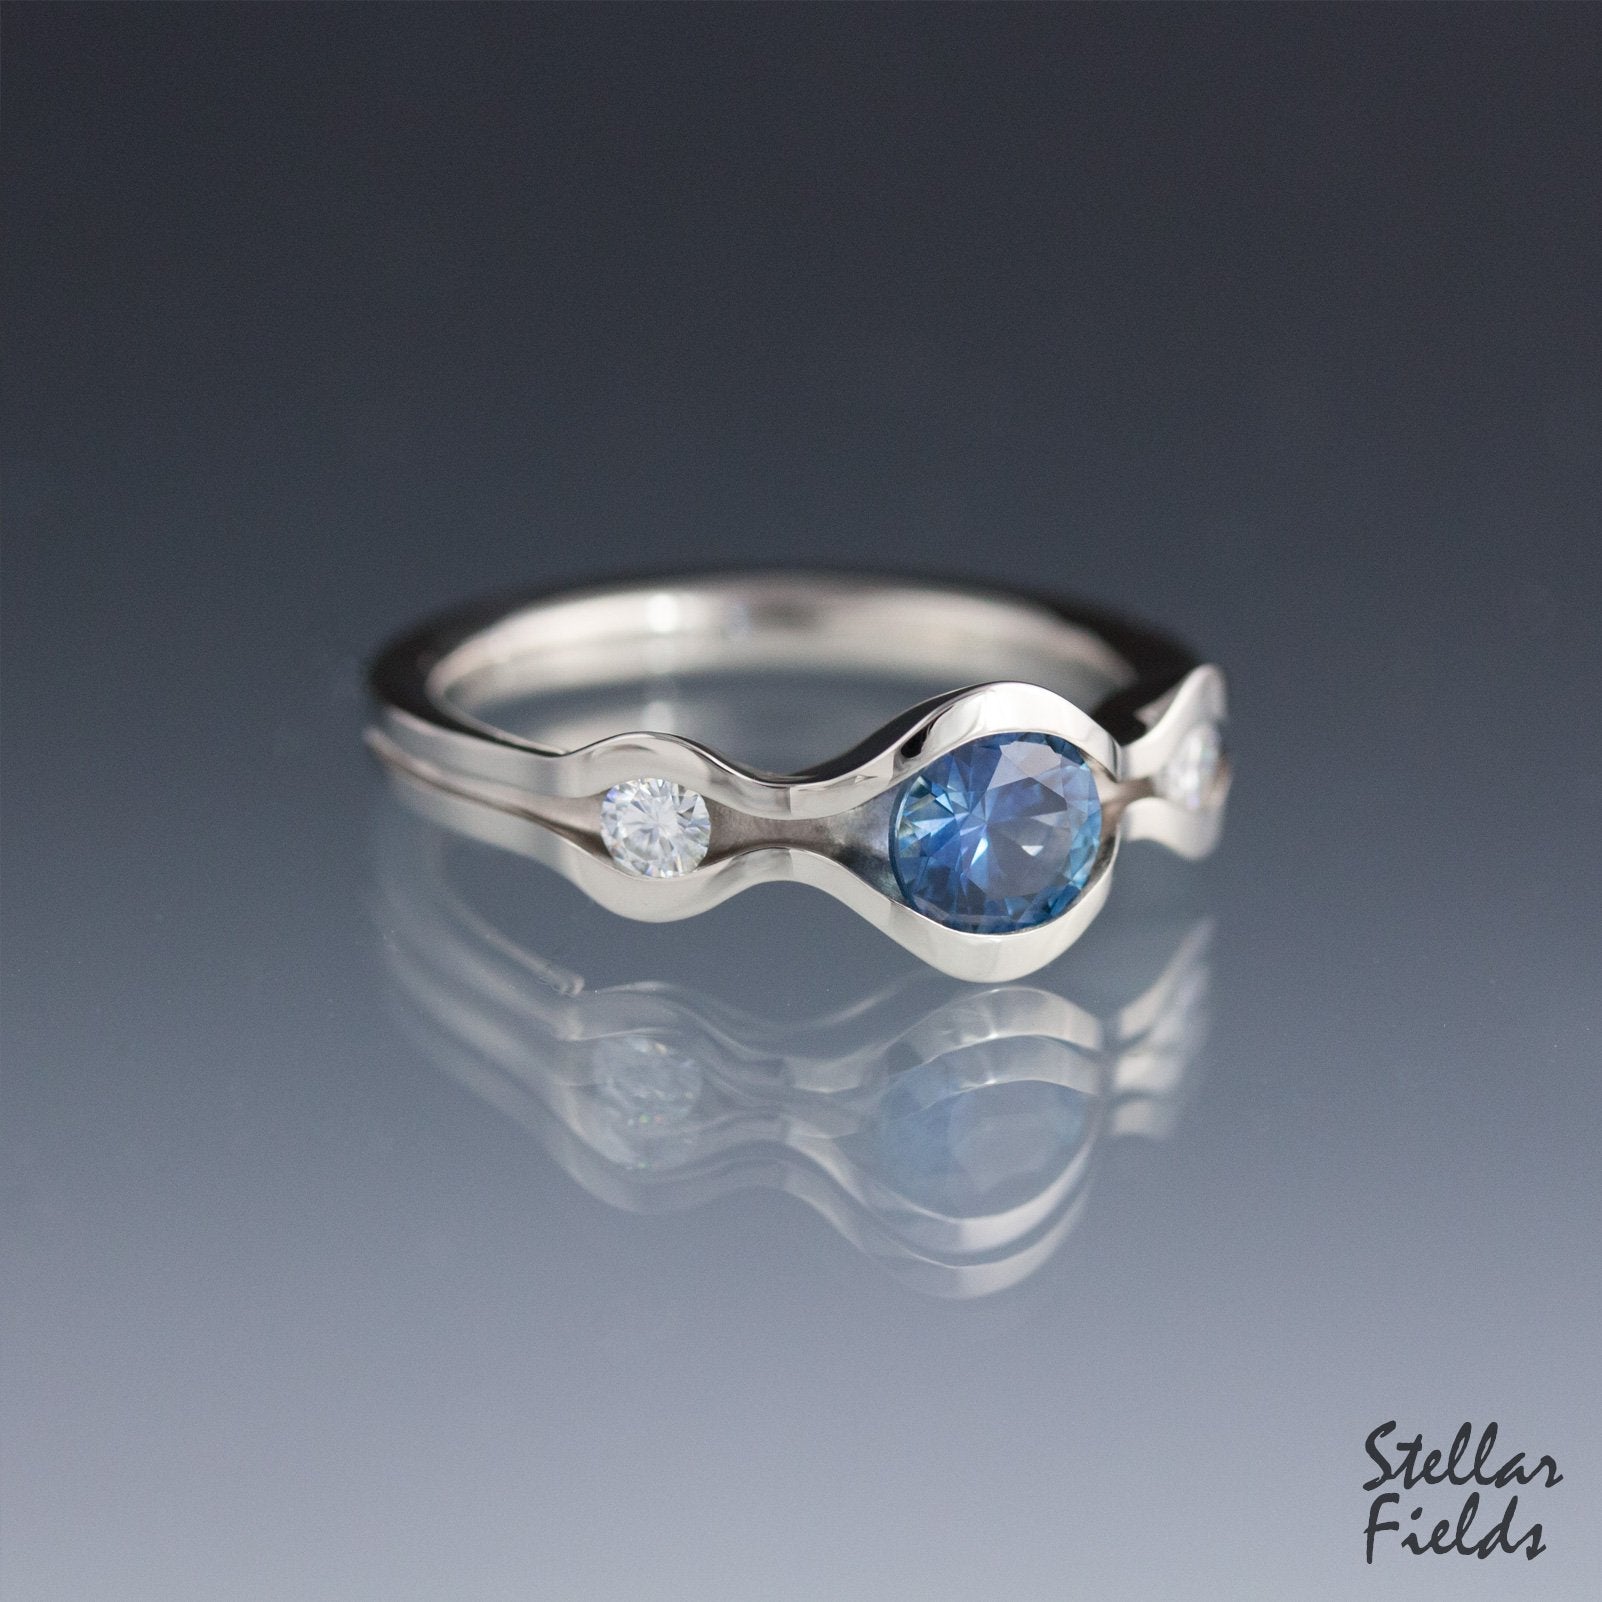 blue montana sapphire three stone engagement ring with diamond accents modern wave design stellar fields jewelry